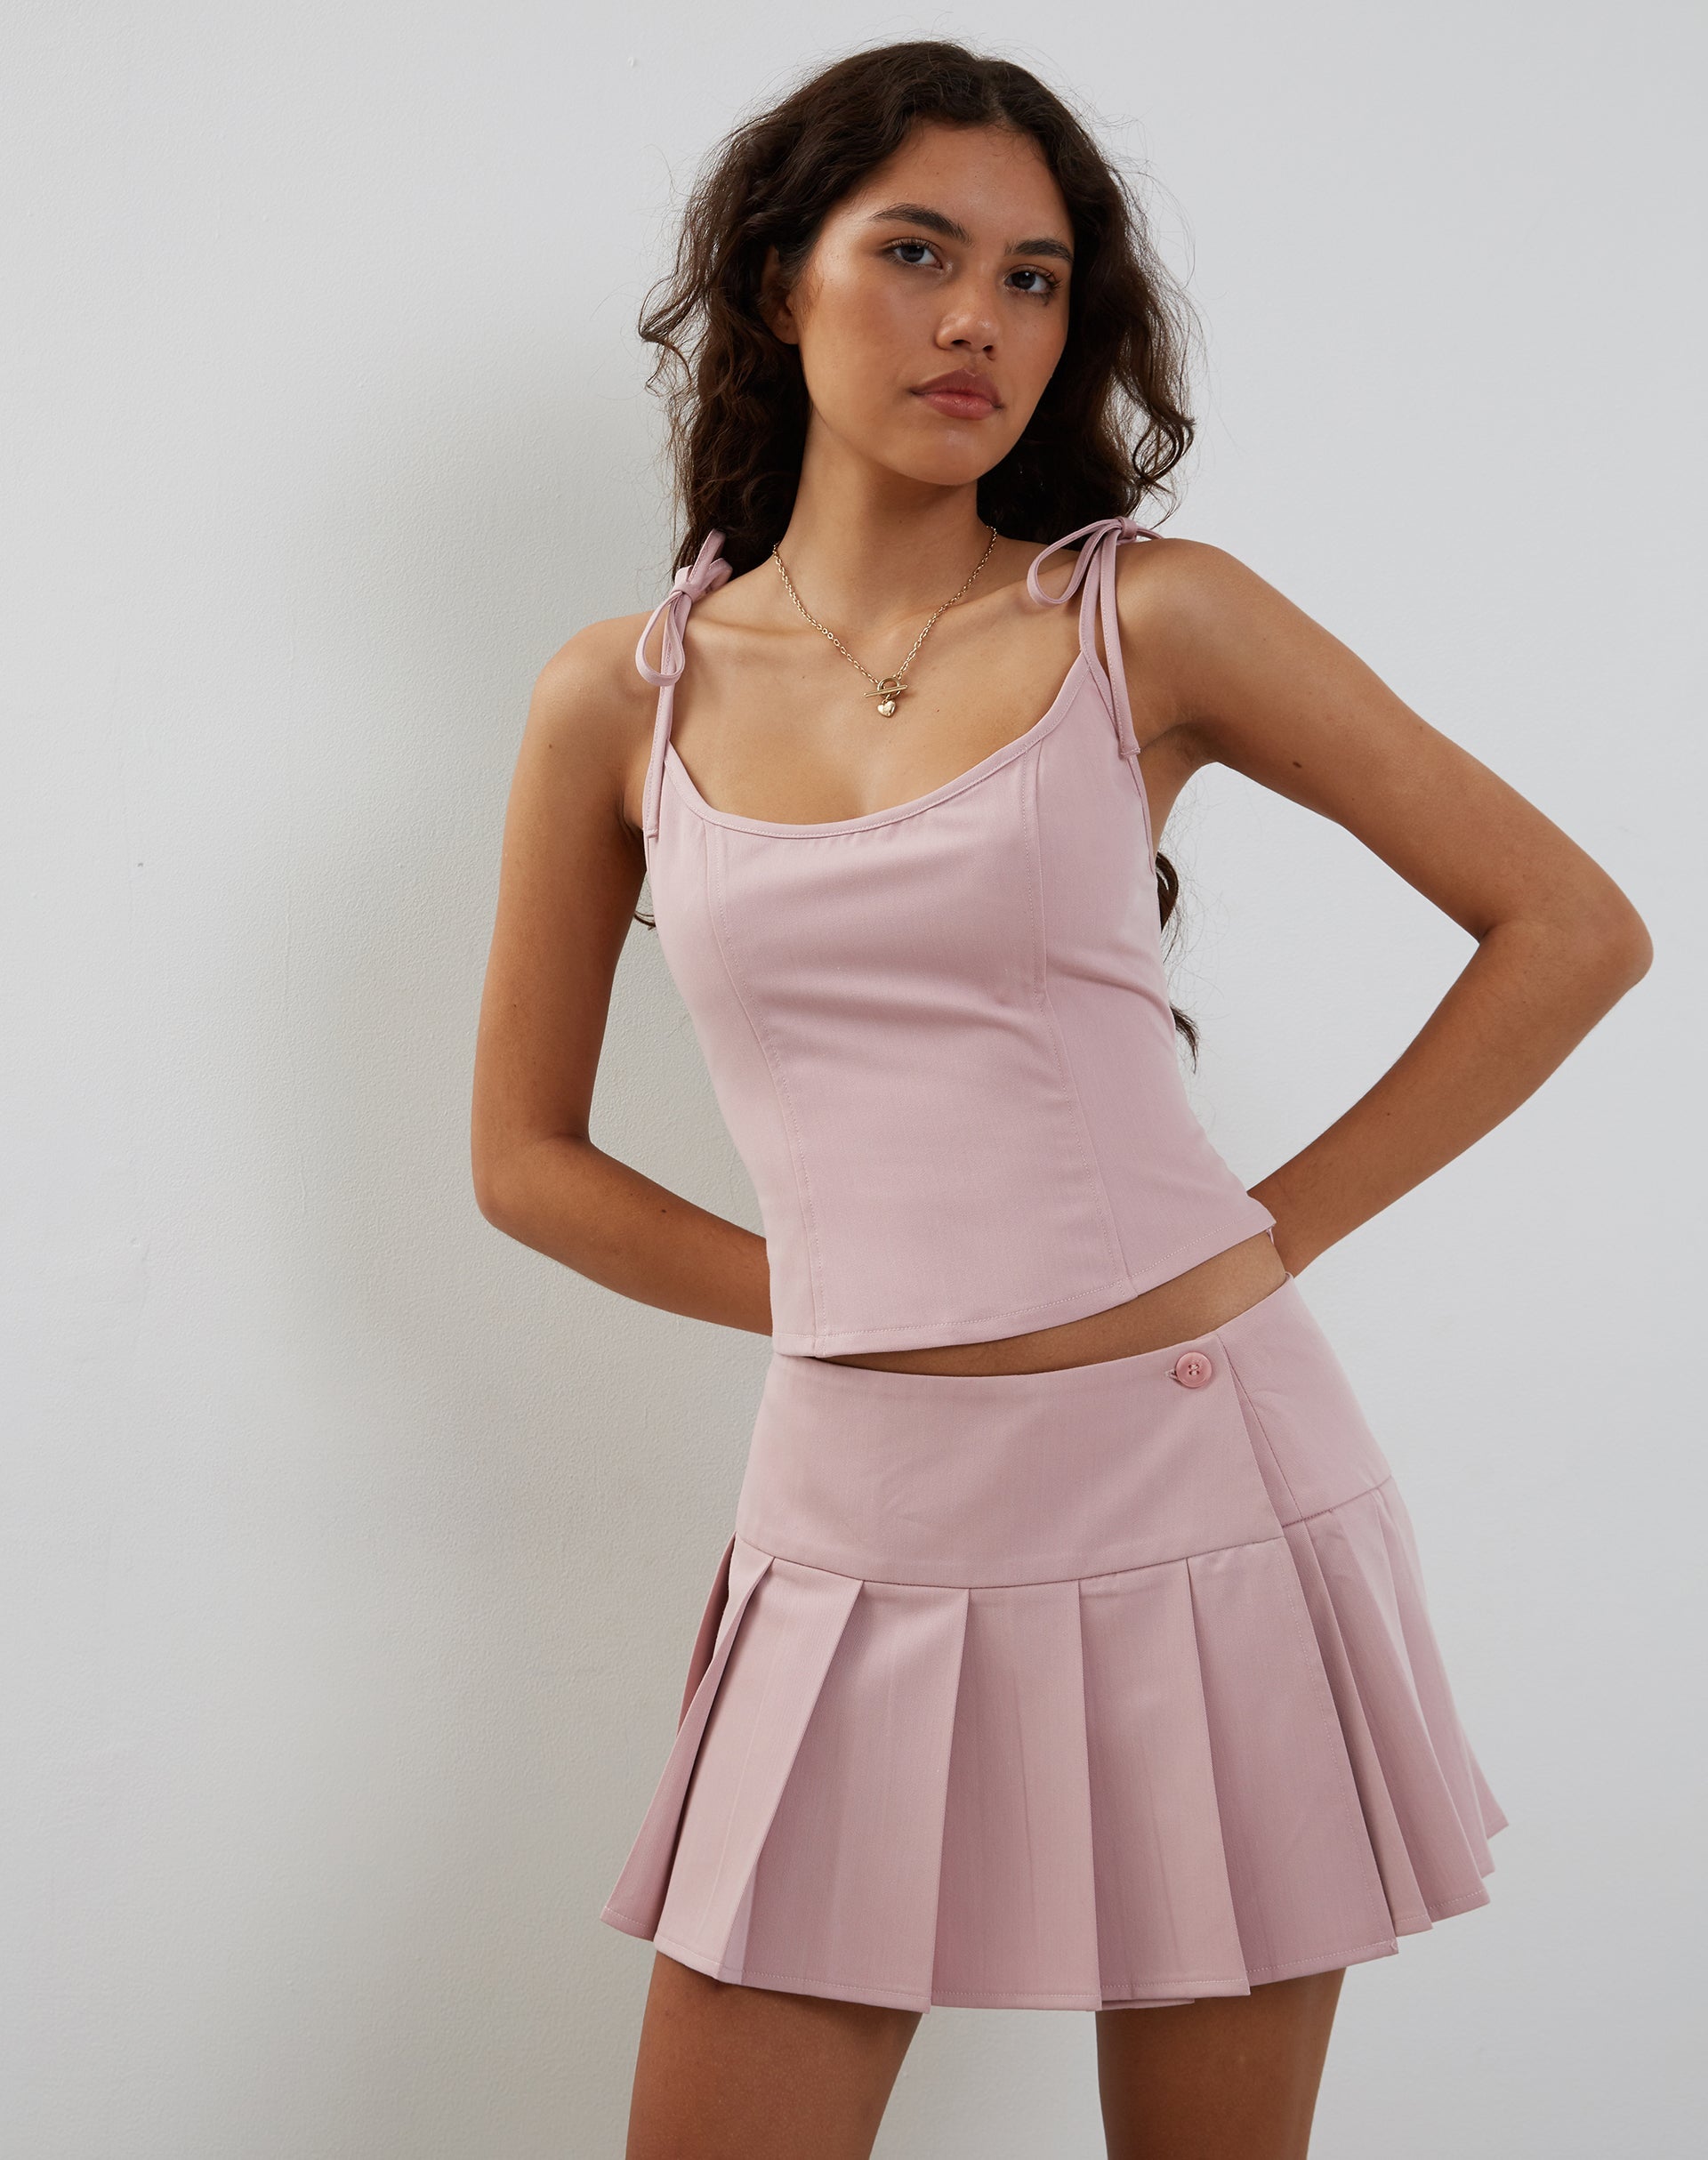 Image de Casini Micro jupe plissée en rose